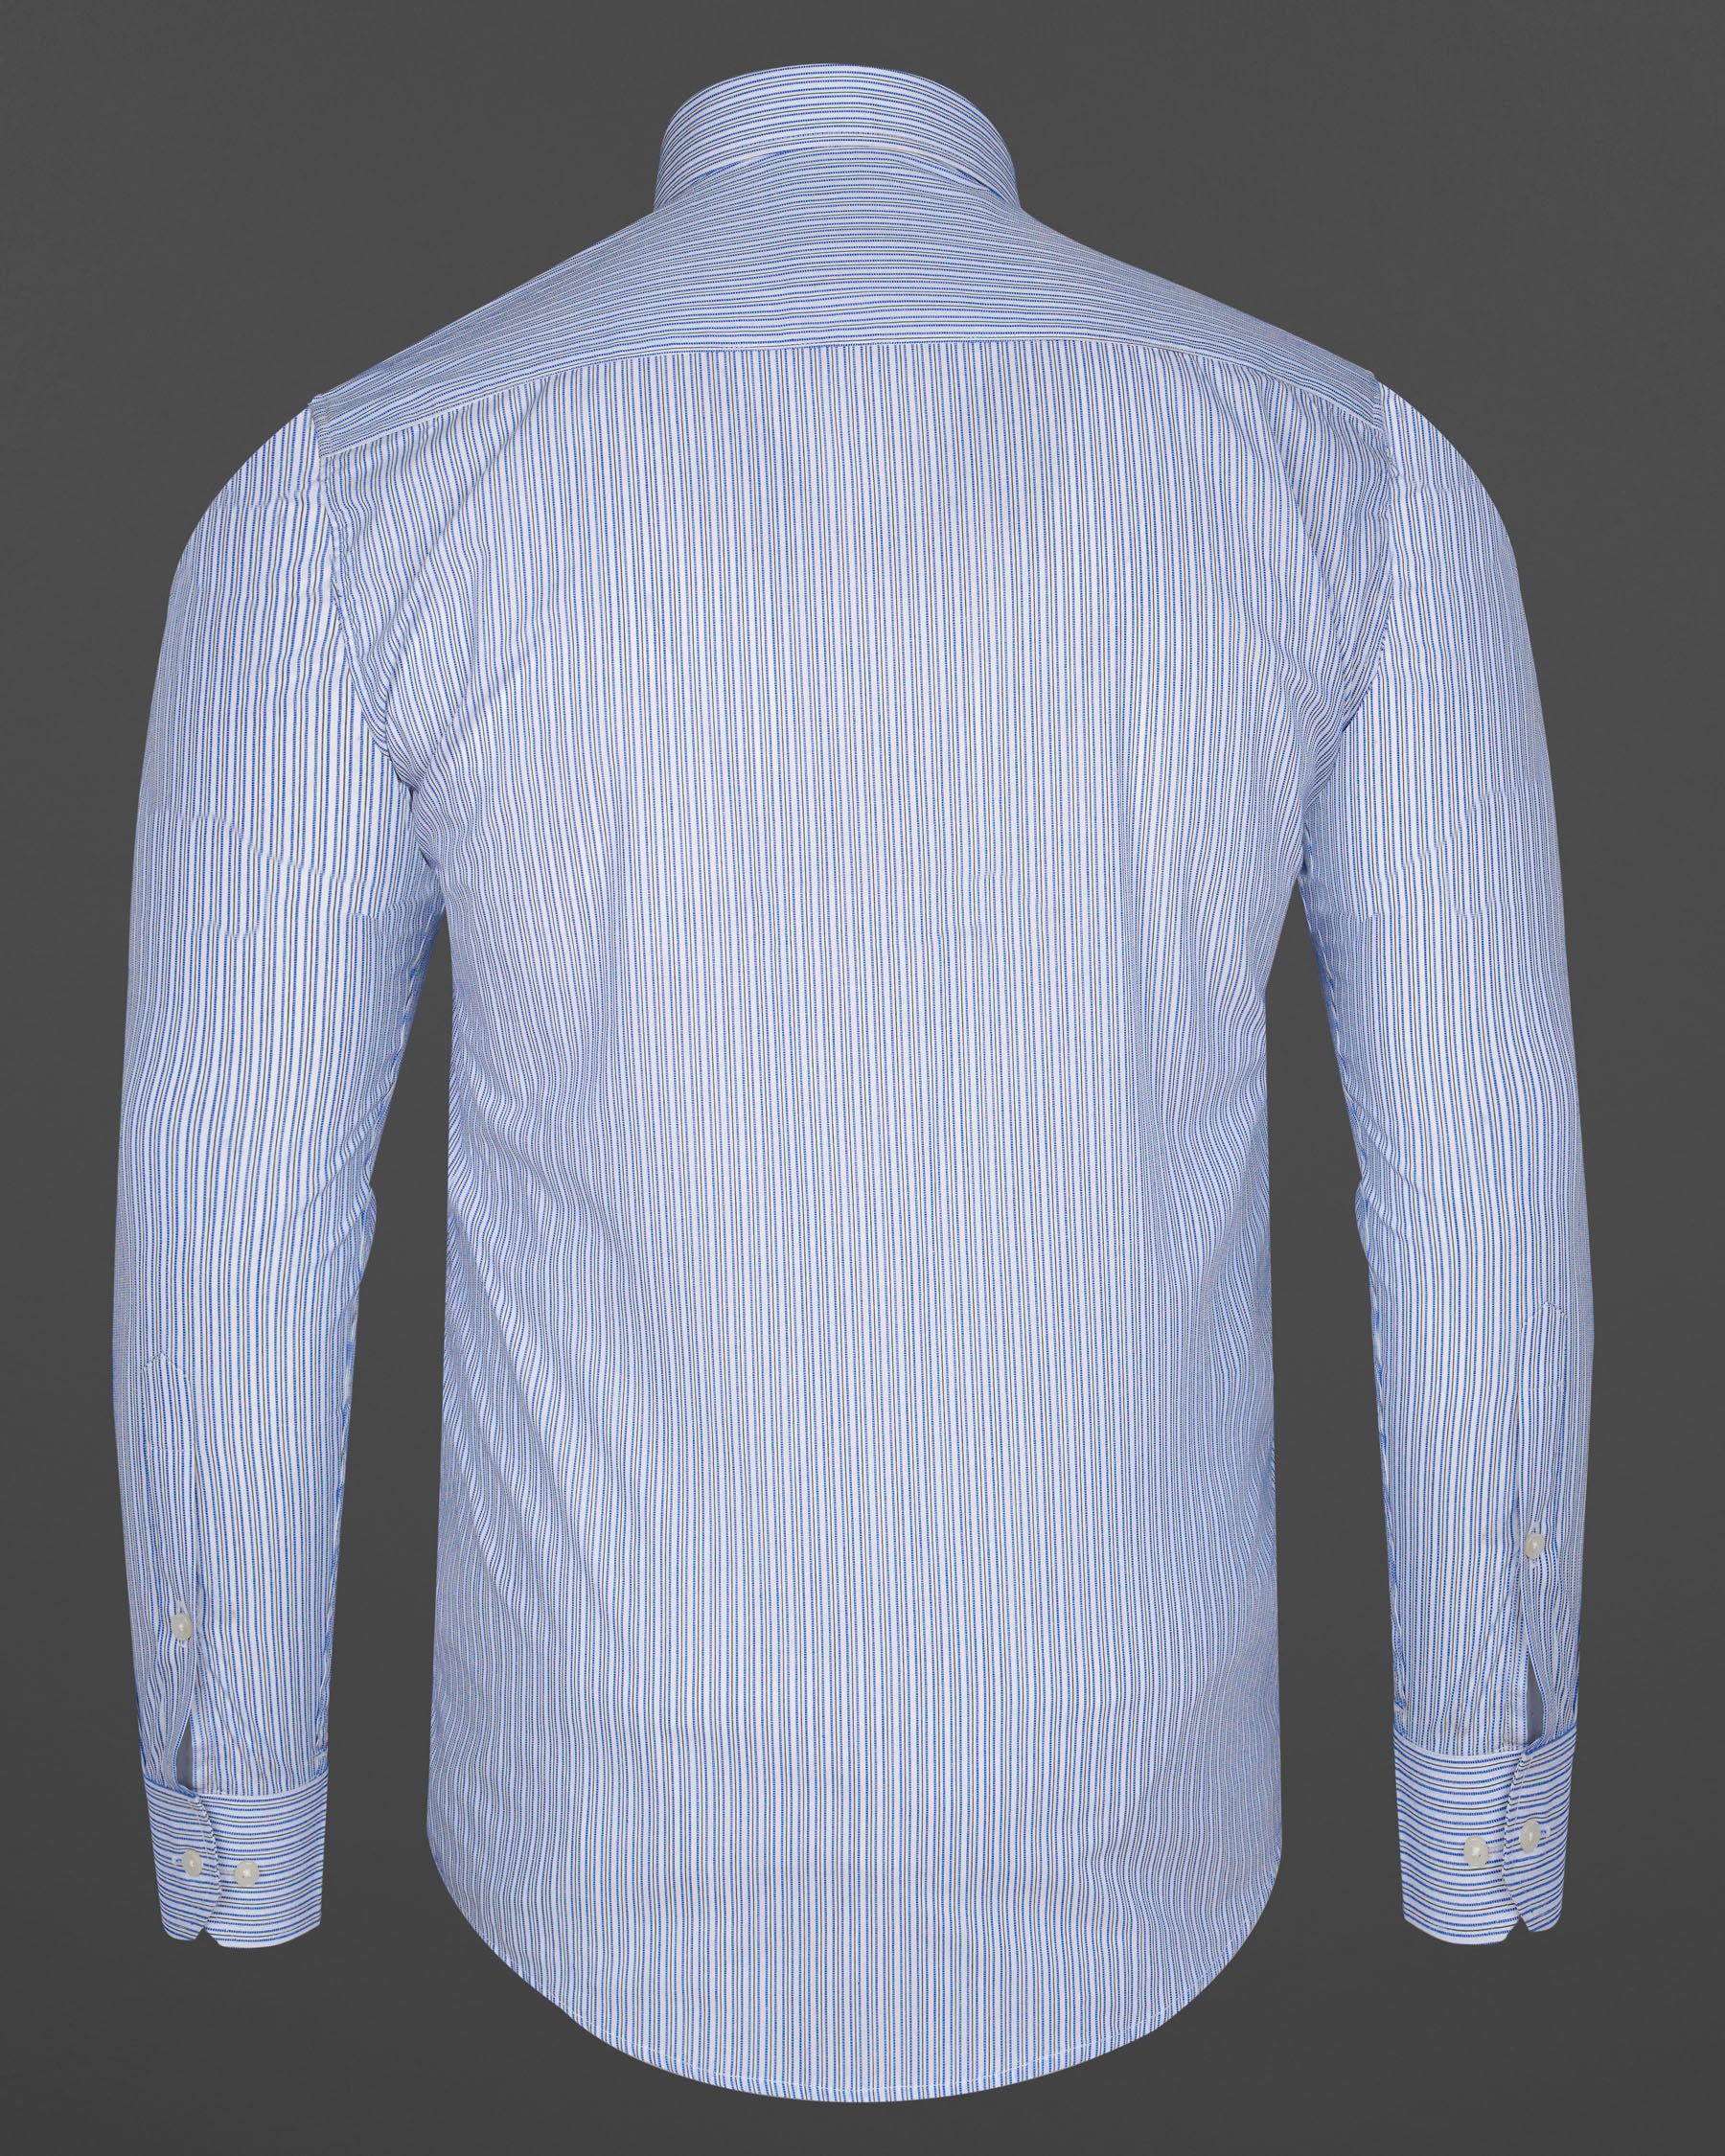 Glaucous Blue with White Striped Dobby Textured Premium Giza Cotton Shirt 8000-CA-38,8000-CA-H-38,8000-CA-39,8000-CA-H-39,8000-CA-40,8000-CA-H-40,8000-CA-42,8000-CA-H-42,8000-CA-44,8000-CA-H-44,8000-CA-46,8000-CA-H-46,8000-CA-48,8000-CA-H-48,8000-CA-50,8000-CA-H-50,8000-CA-52,8000-CA-H-52